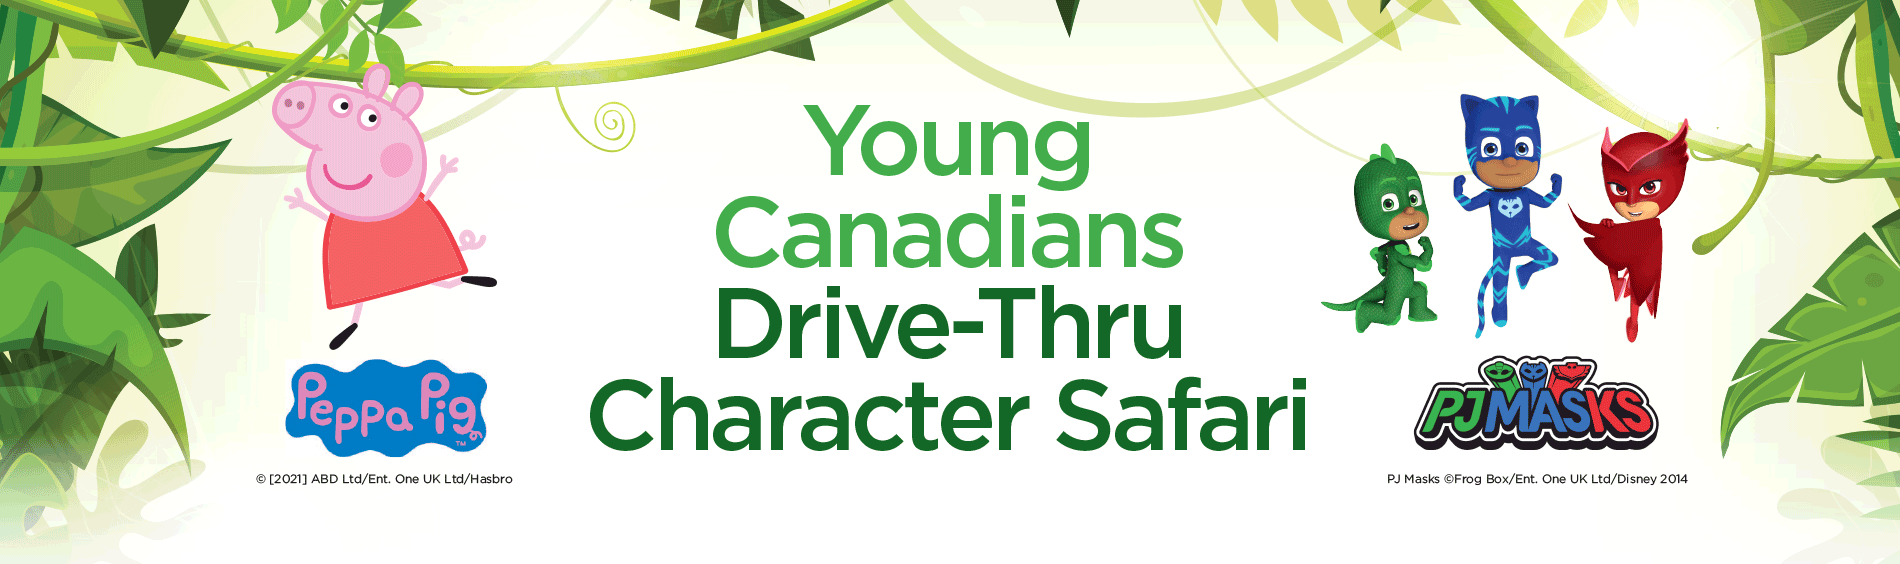 Young Canadians Character Safari image